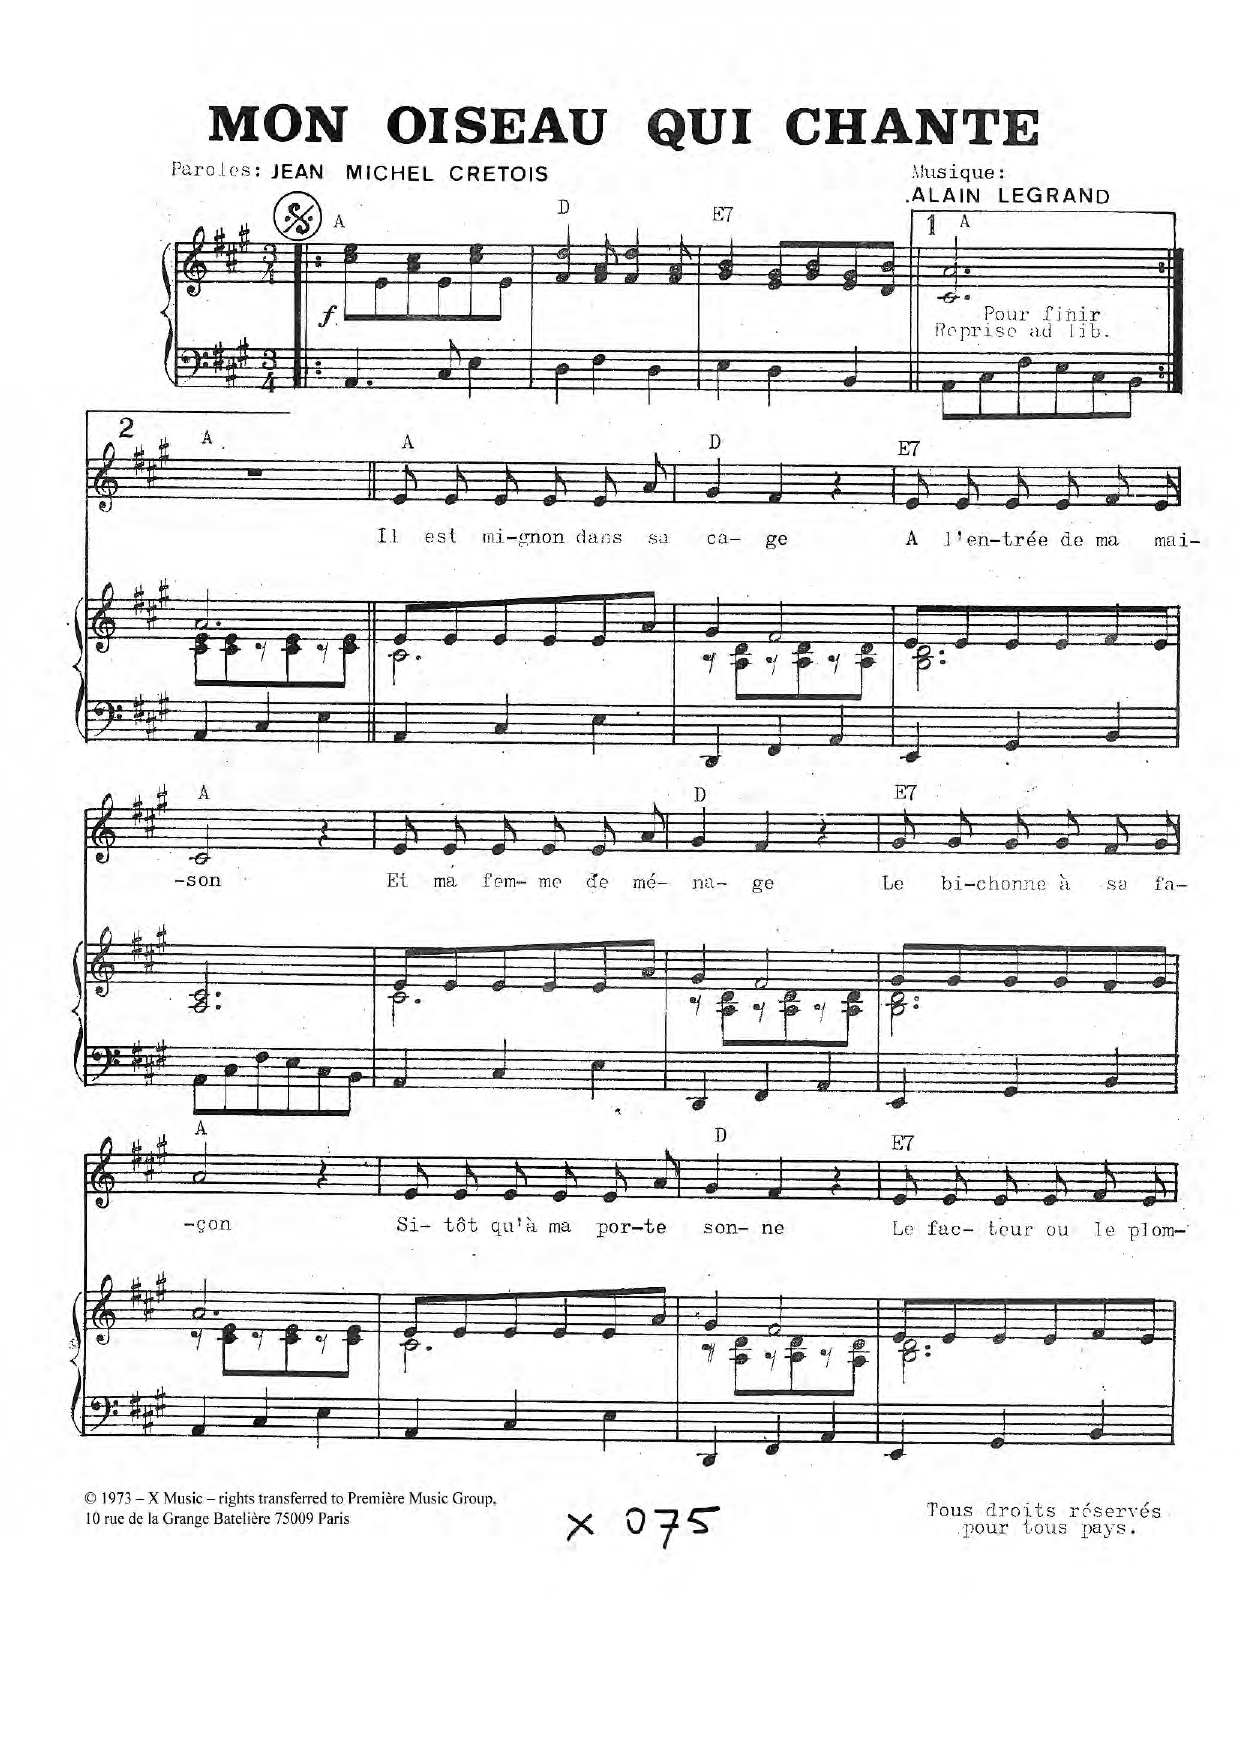 Alain Legrand Mon Oiseau Qui Chante Sheet Music Notes & Chords for Piano & Vocal - Download or Print PDF